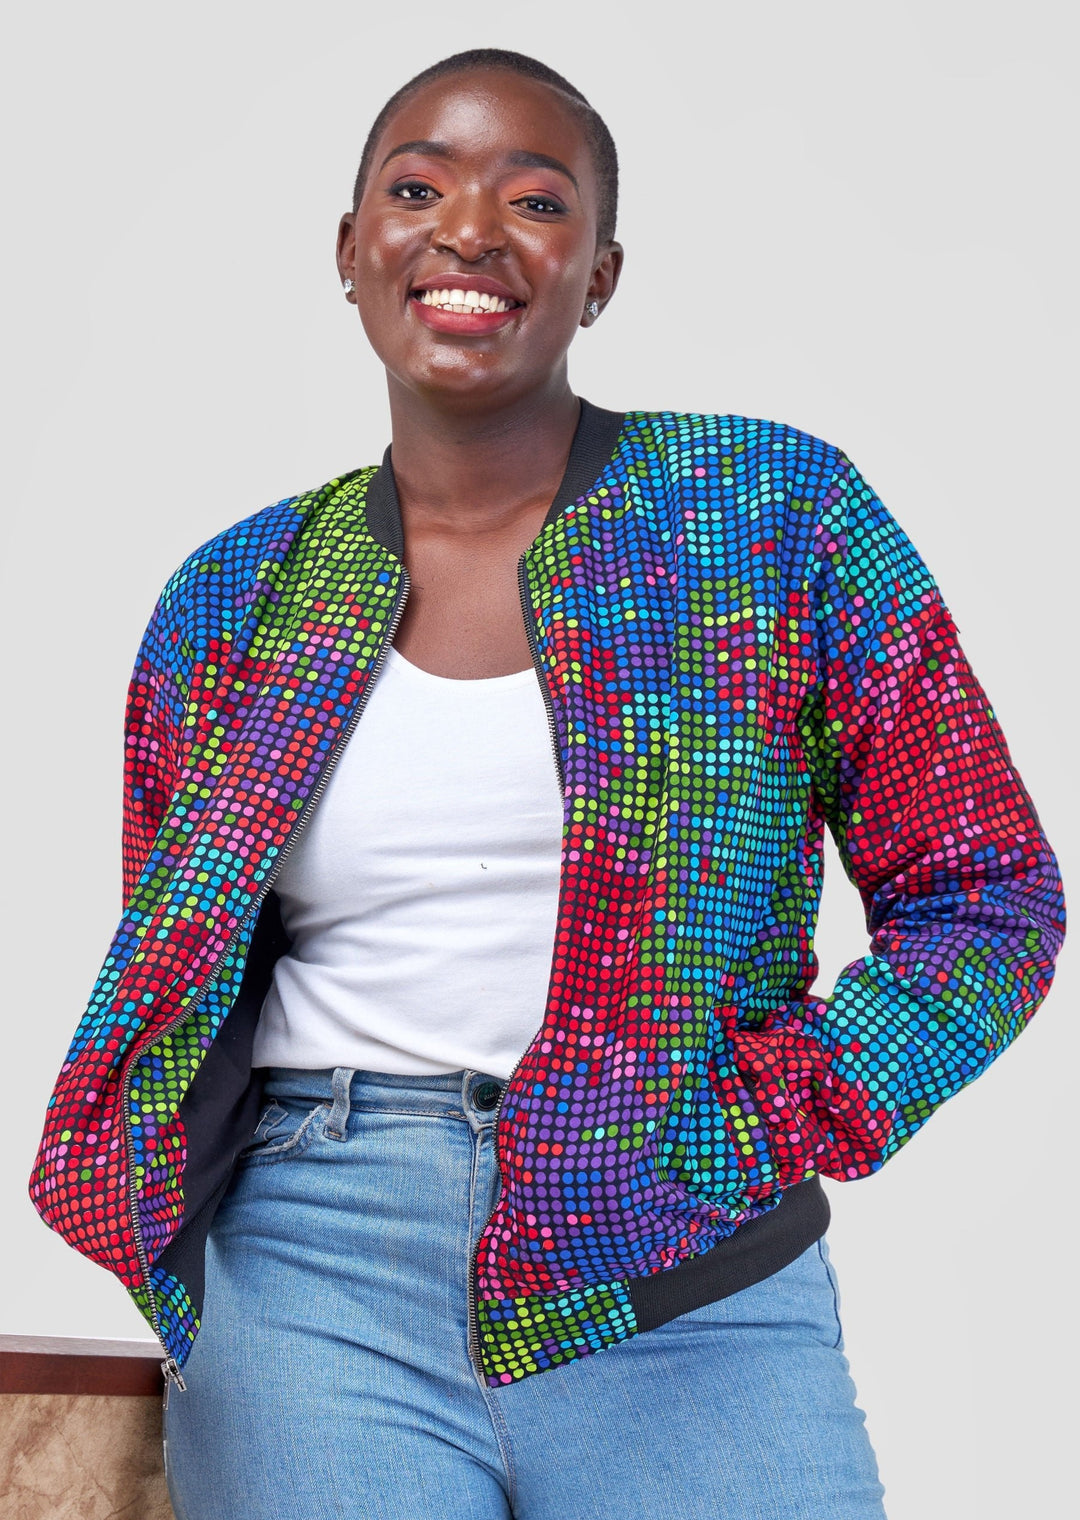 Bomberjacke ‚Sherehe‘ - mikono.africa Jacken aus Kenia bunte Bomberjacke Partyjacke faire sozial nachhaltig designed in Kenia